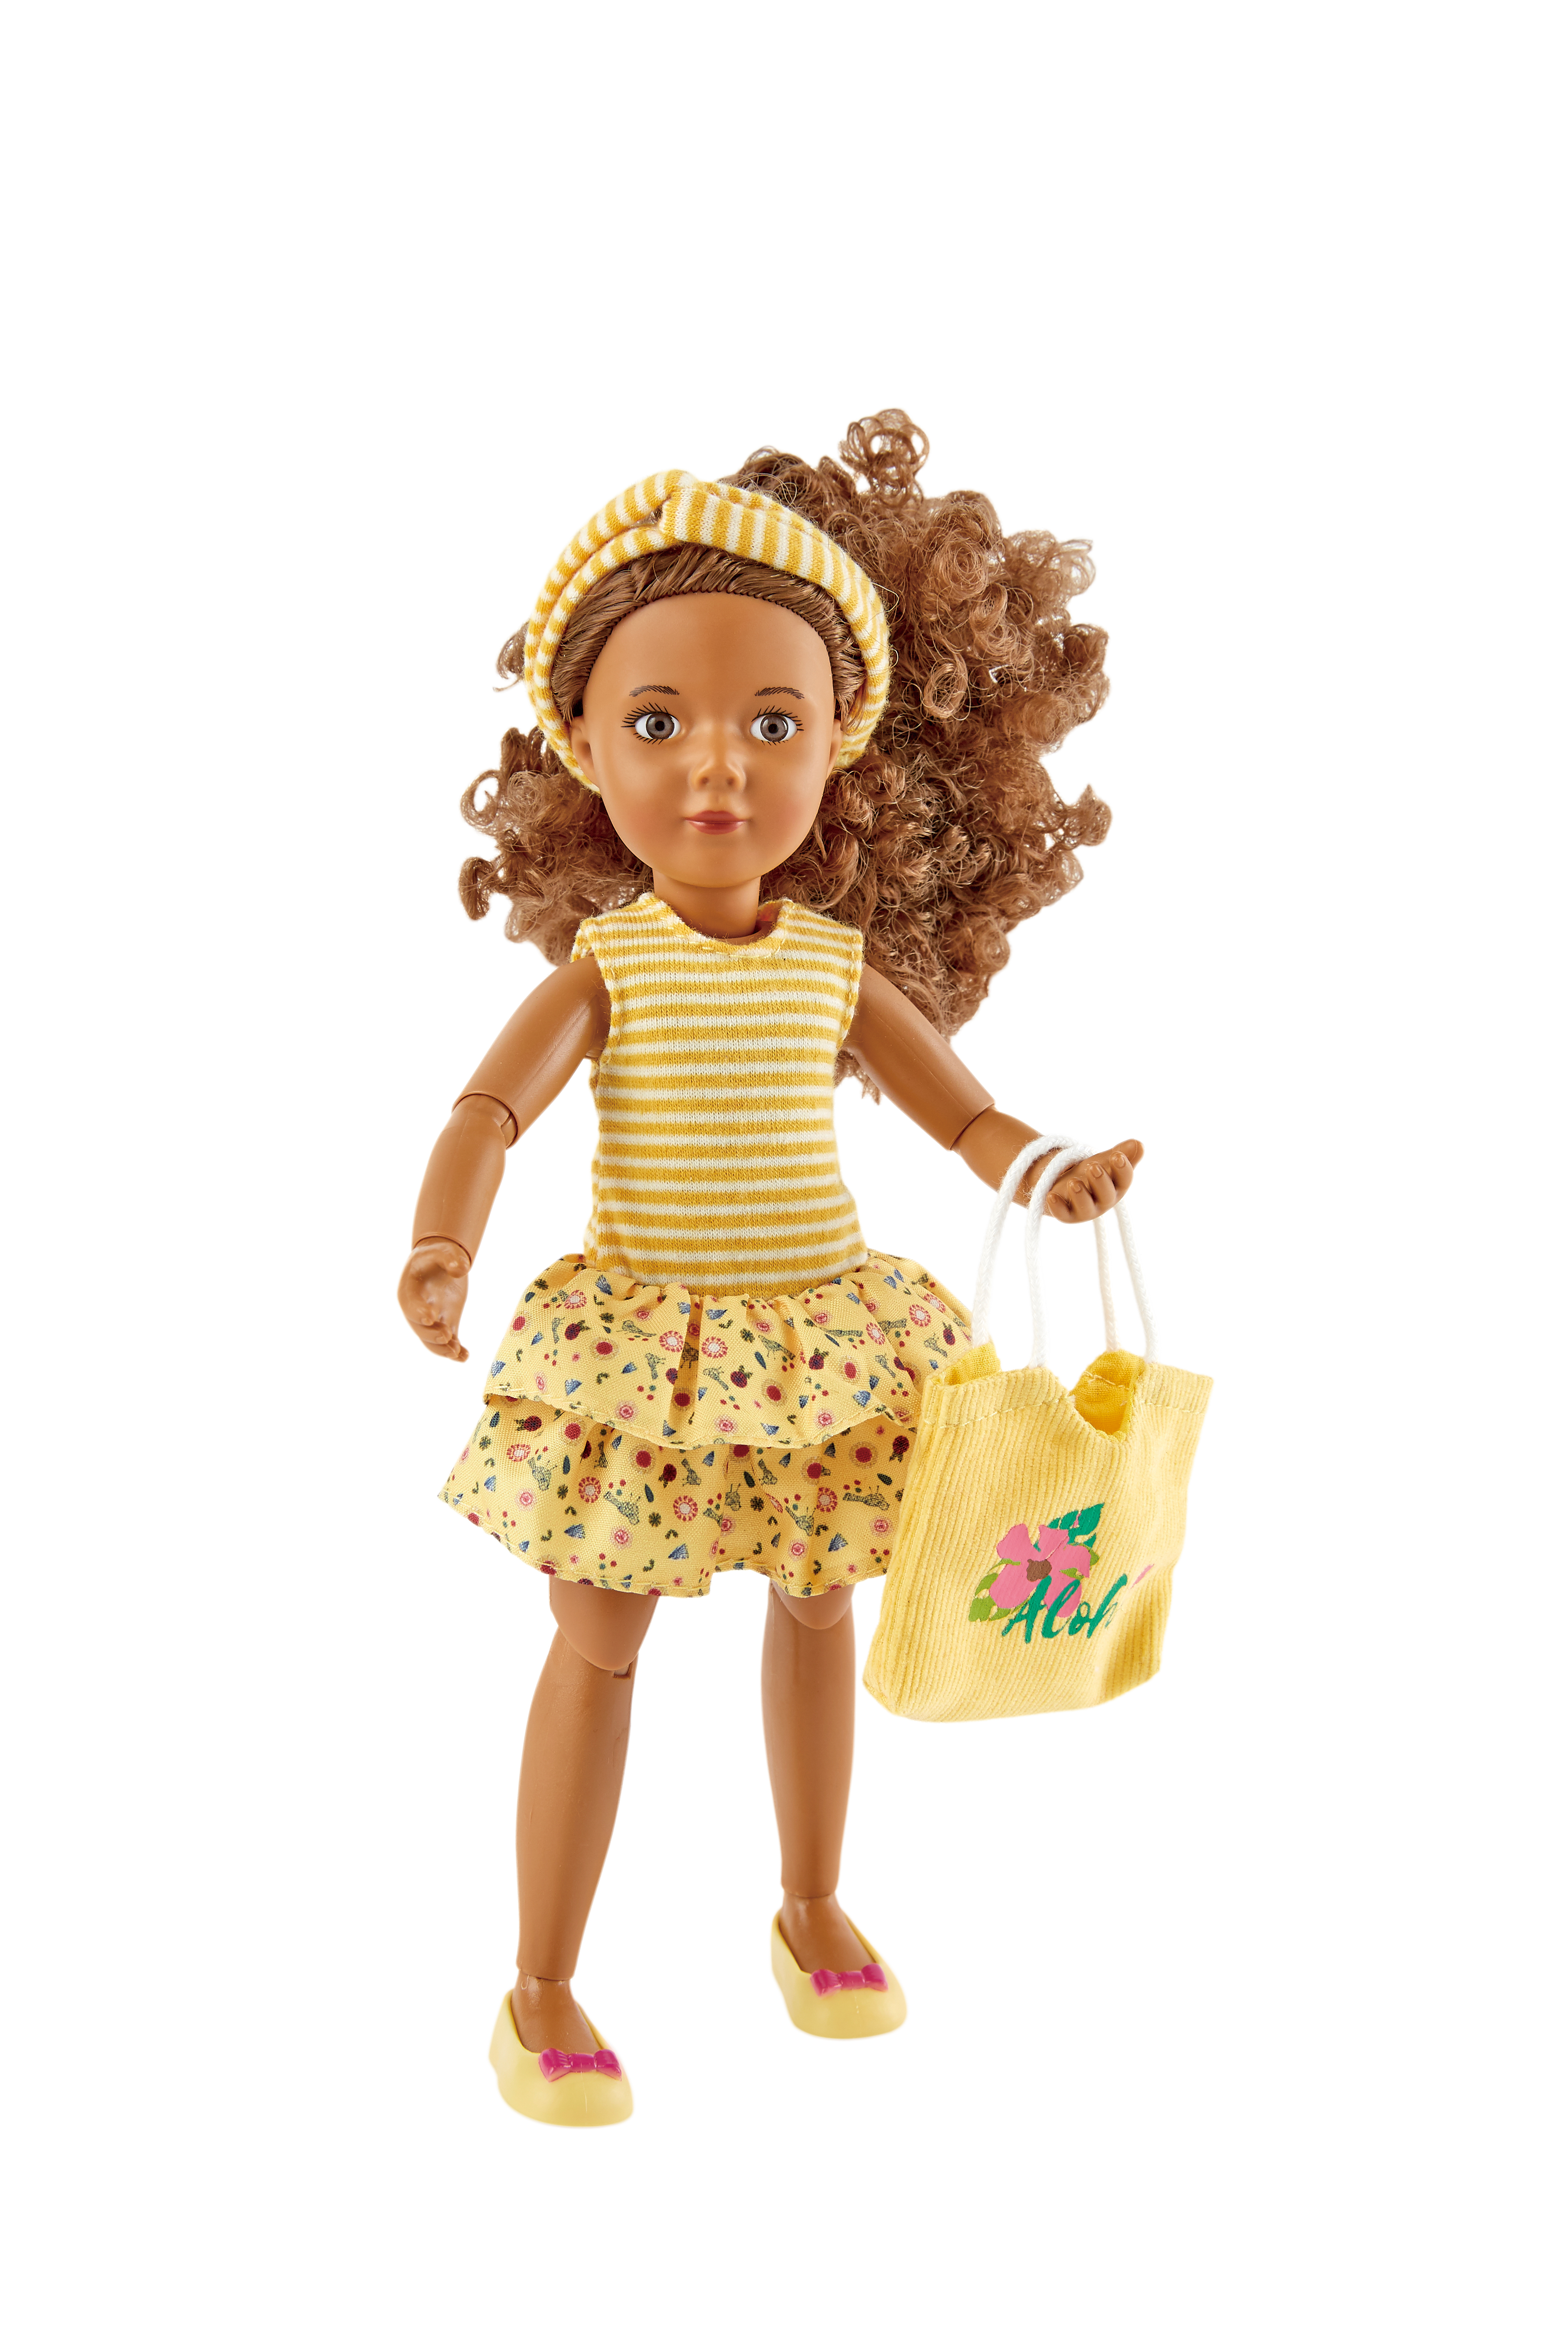 Кукла Джой Kruselings в летнем желтом наряде, 23 см, арт. 0126873